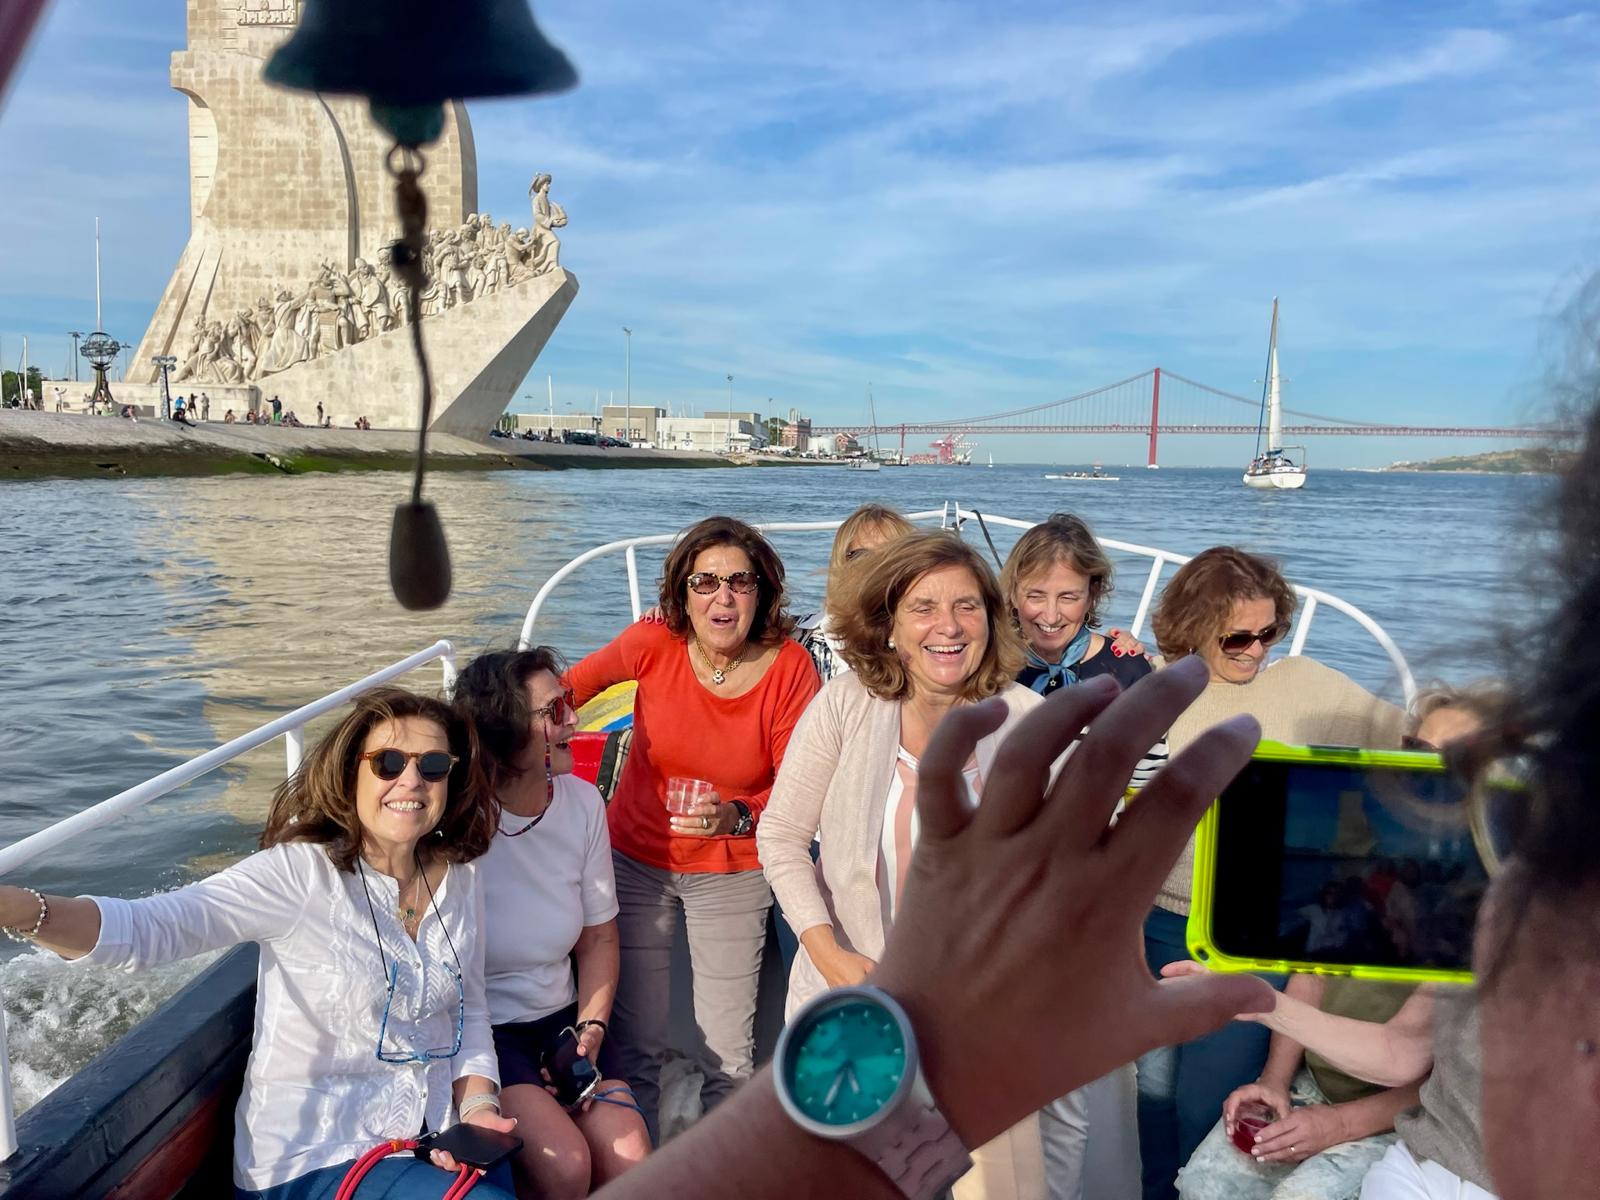 Lisbon: Typical wooden boat tour
